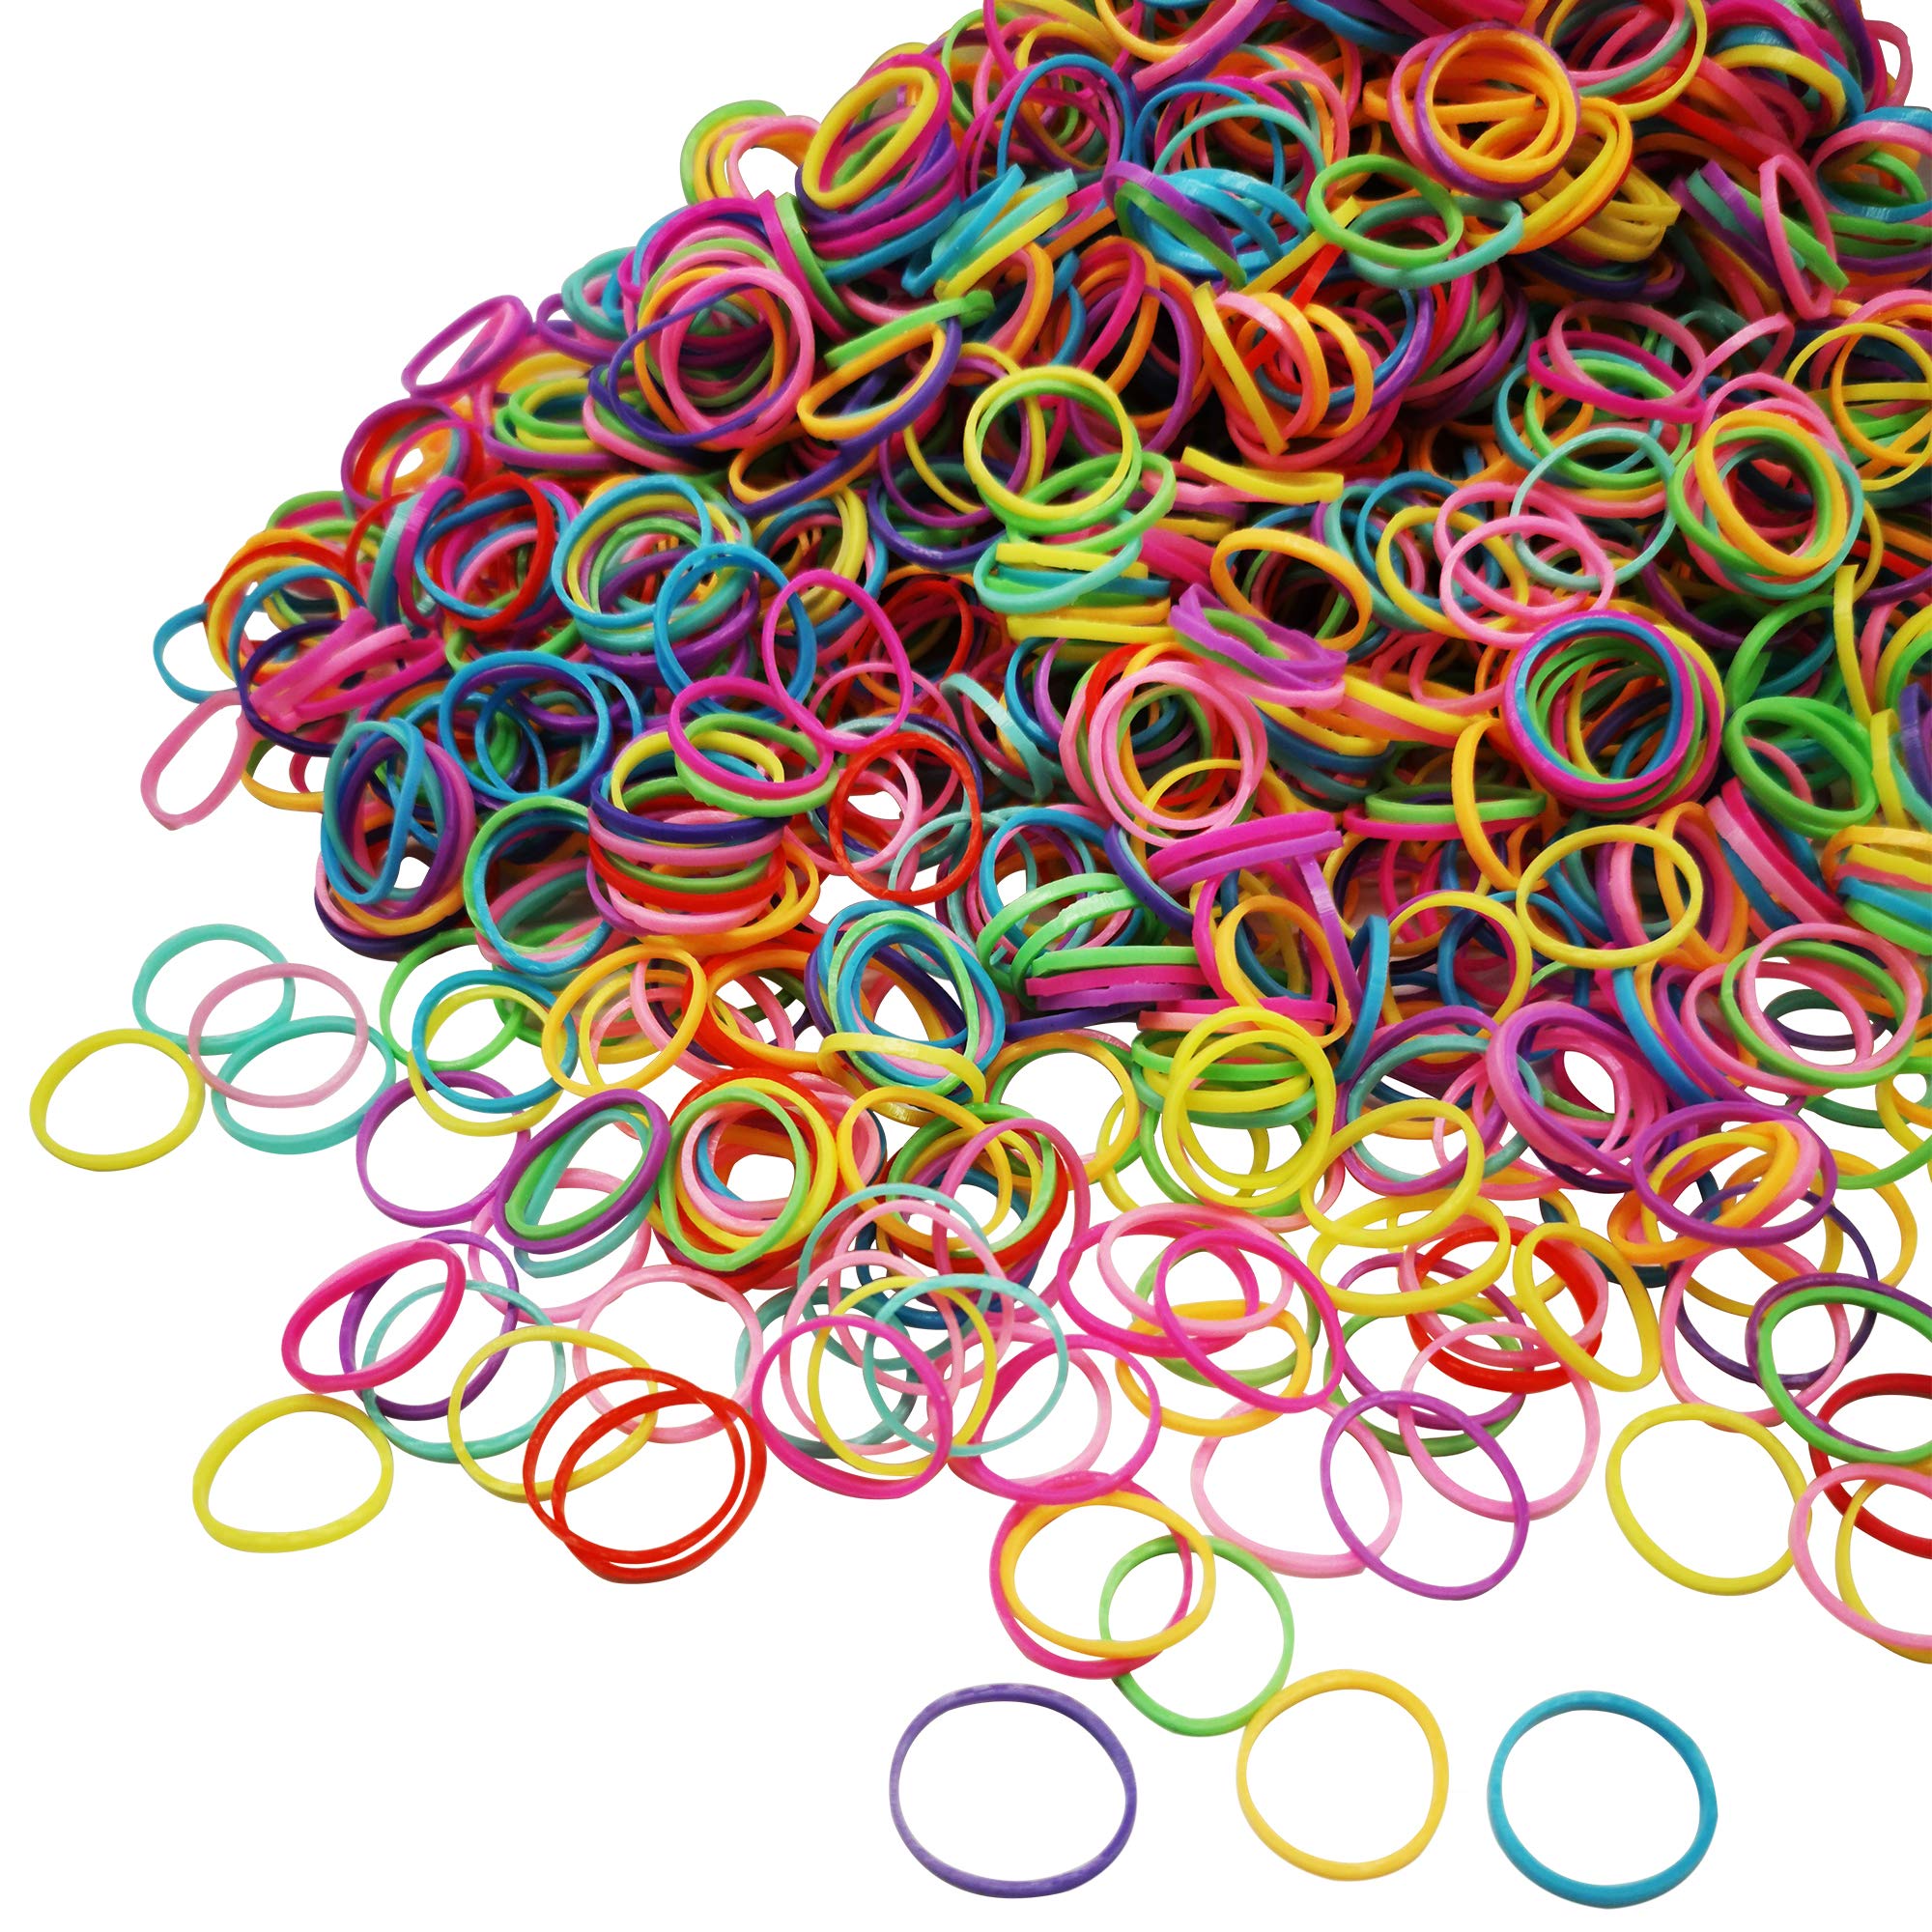  1000pcs Elastic Hair Bands Multi Color Hair Rubber